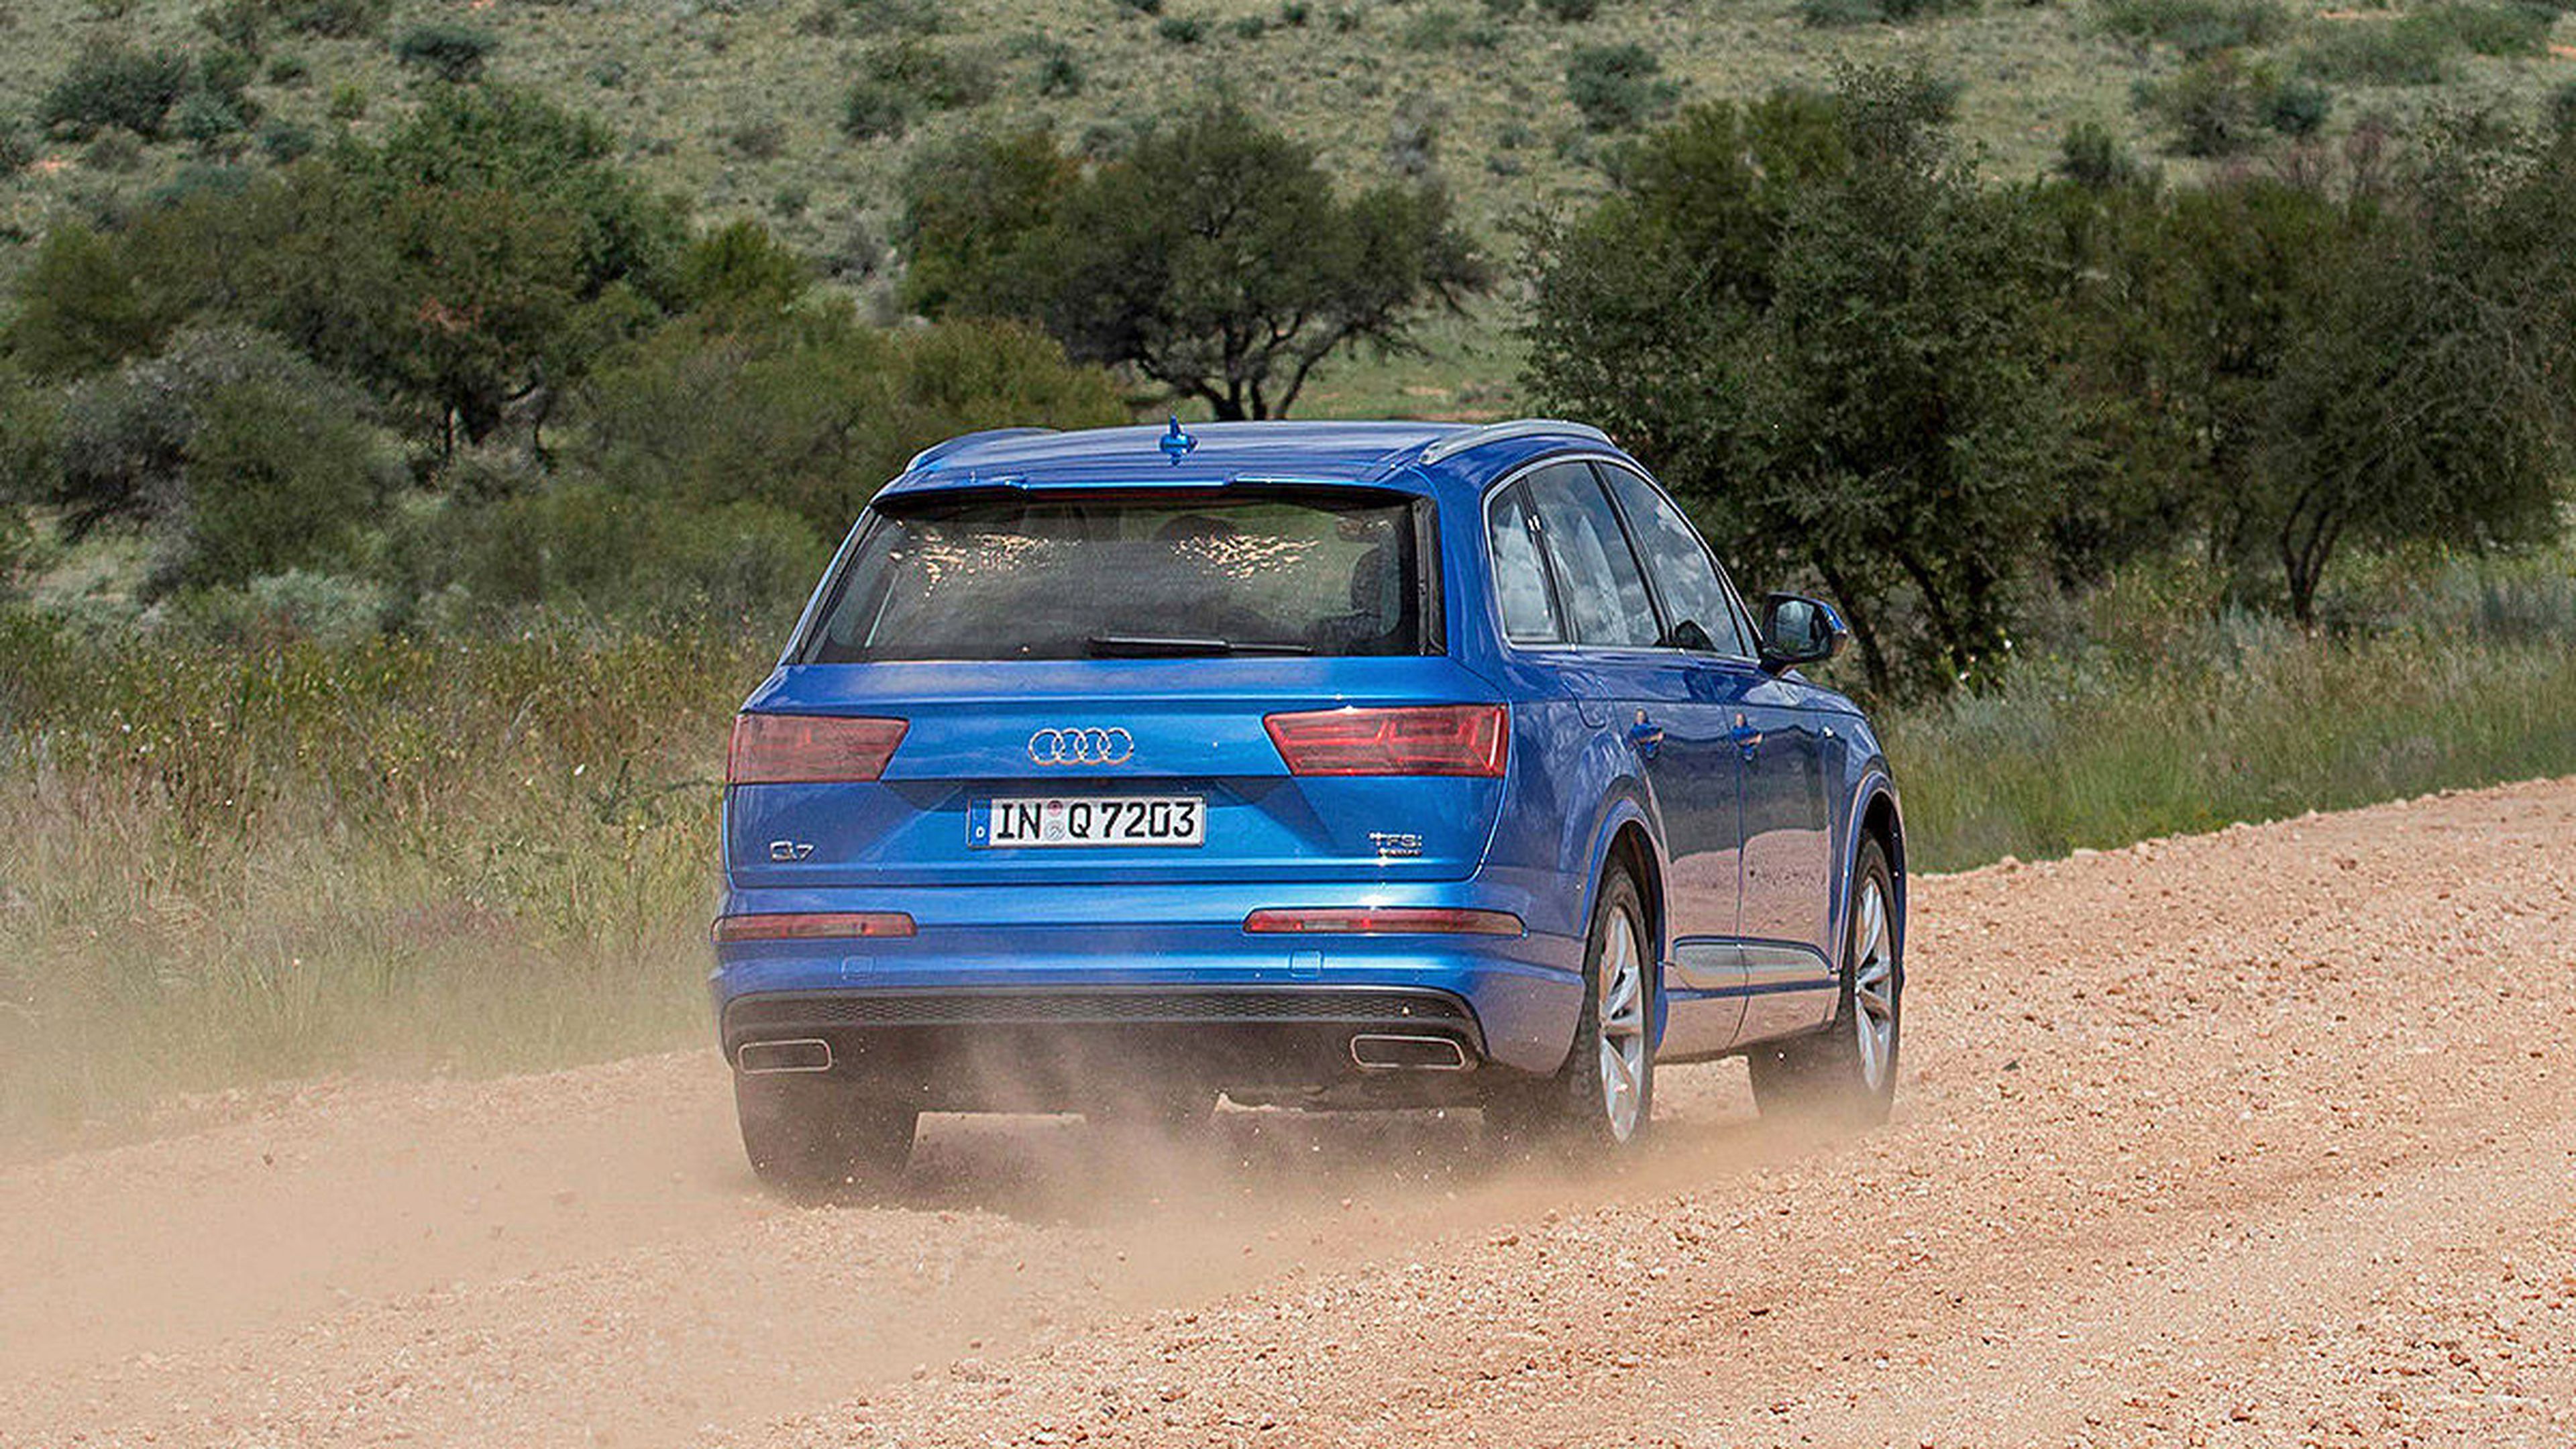 Prueba: Audi Q7 2015 zaga